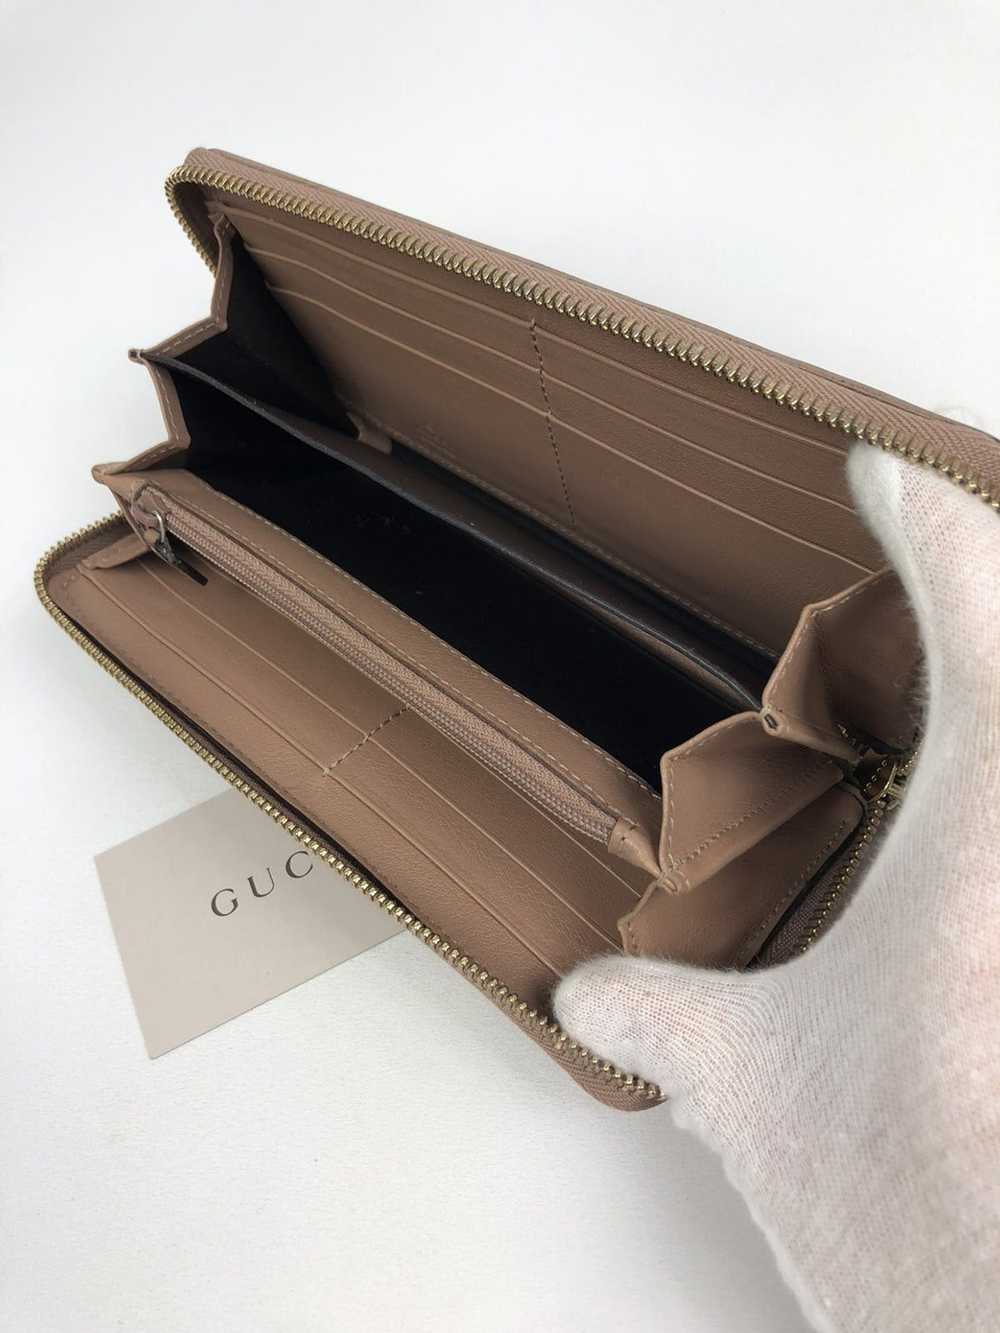 Gucci Gucci GG canvas monogram zippy wallet - image 2